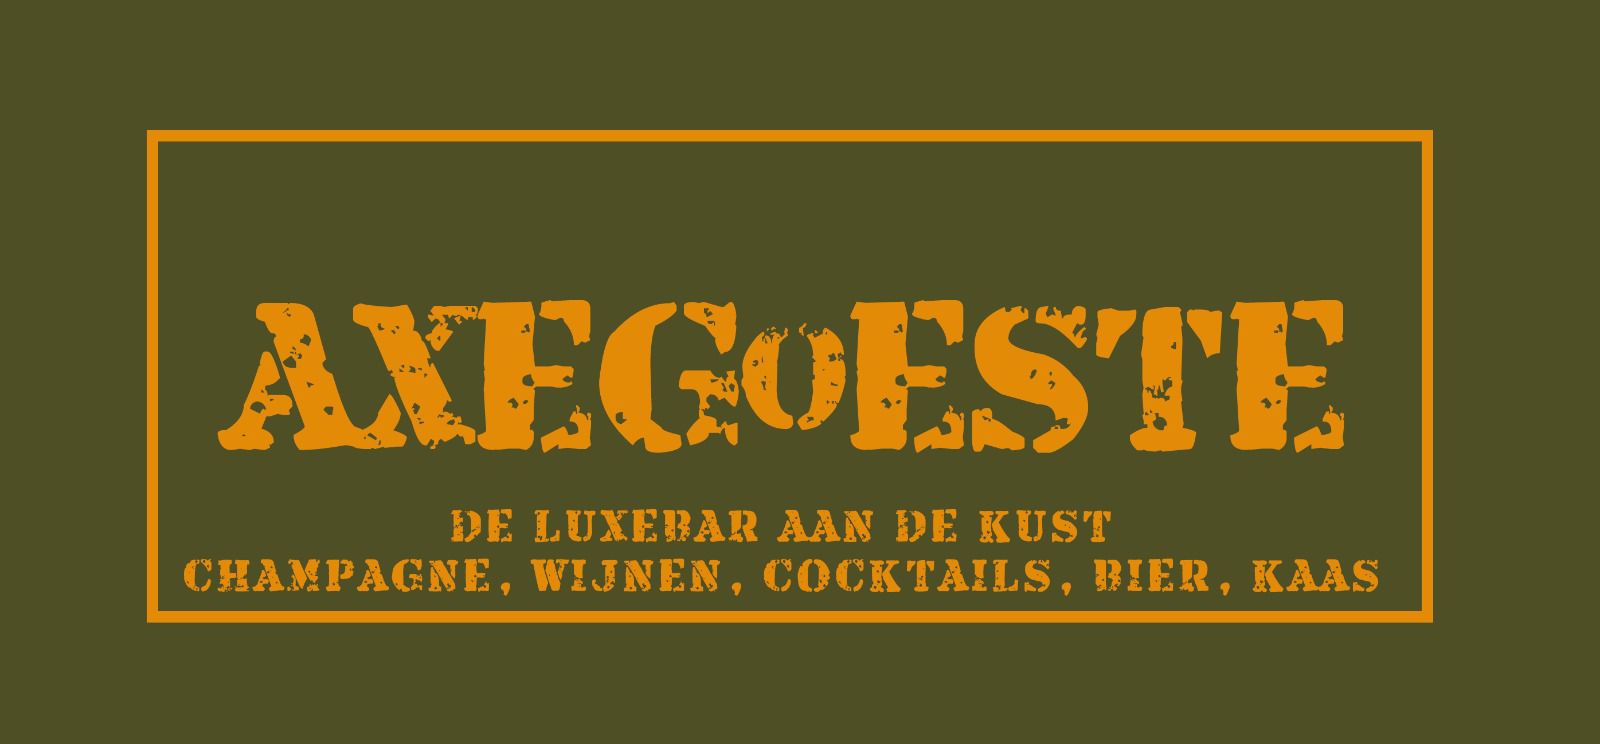 Axegoeste-luxebar-kust-belgie-b